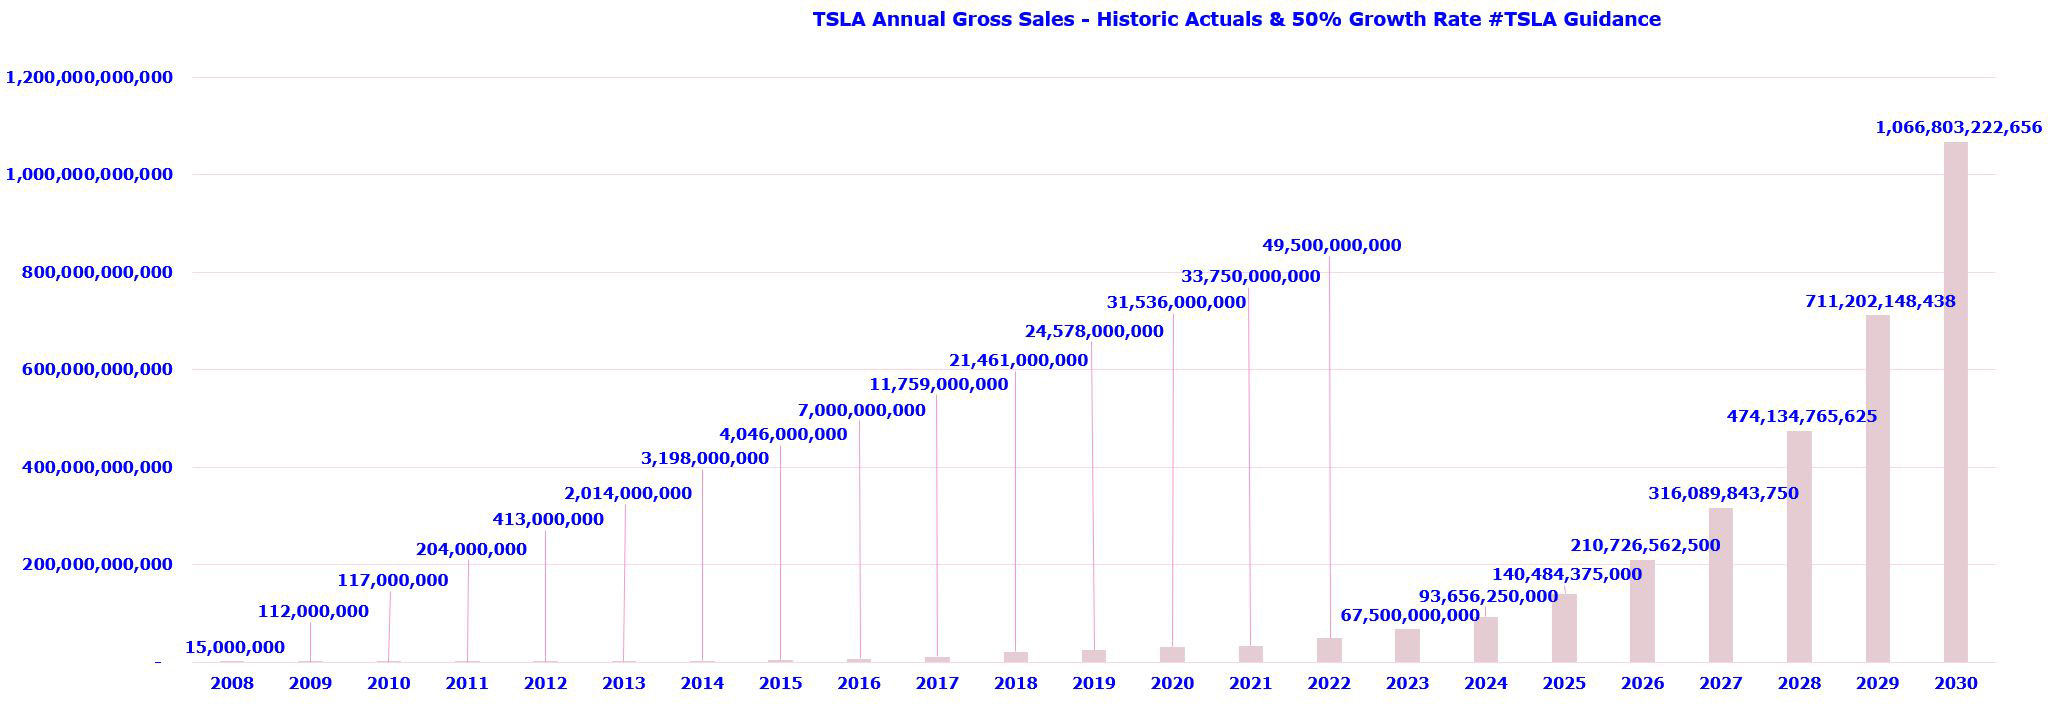 TSLA_2003_to_2030_Sales